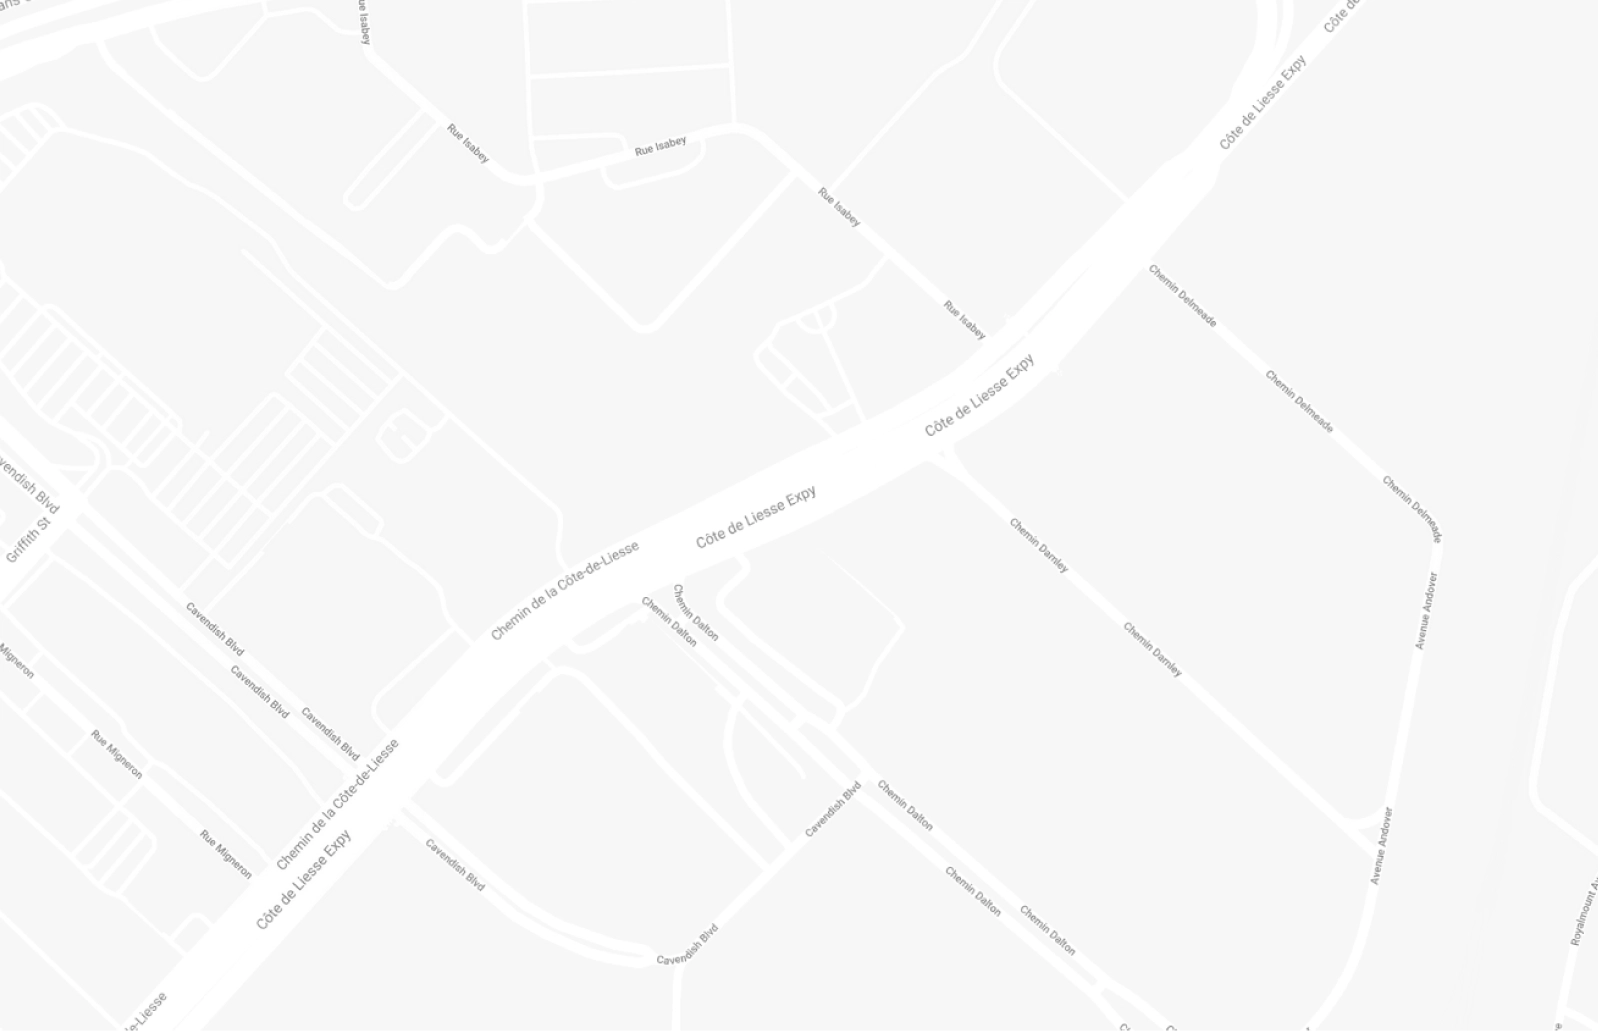 Quartexx location on google maps